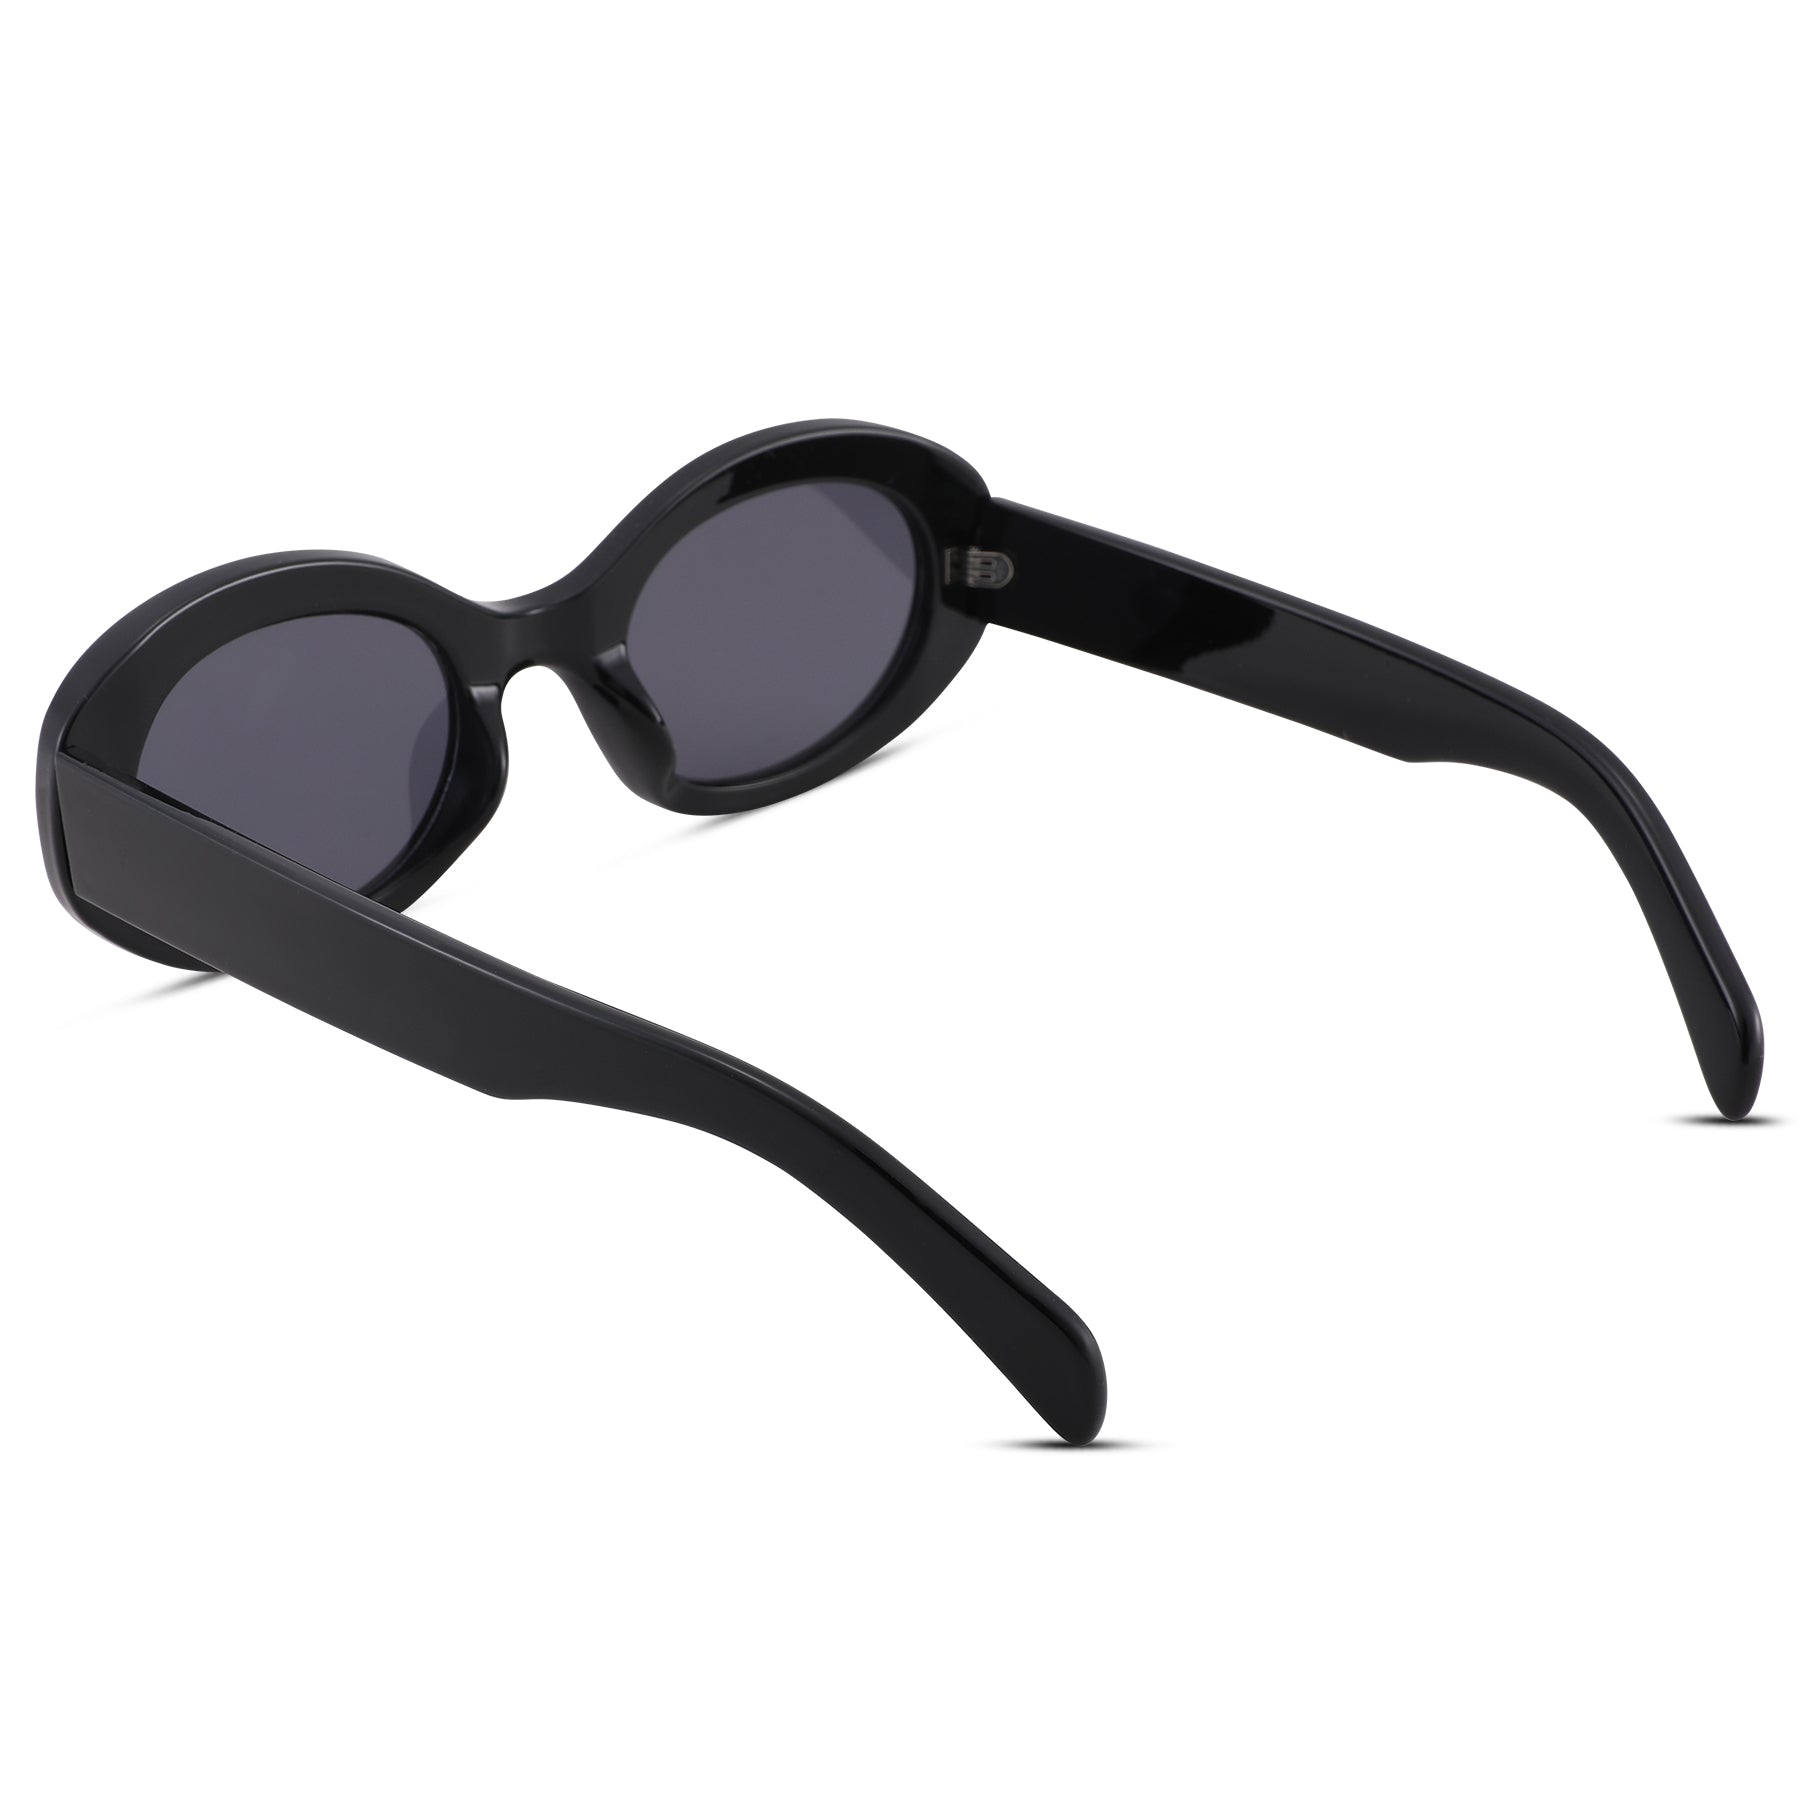  Pro Acme Wrap Around Fashion Sunglasses for Men Women Oval  Sports Shades Outdoor Youth Baseball Glasses UV400 (Matte Black Frame, Black Lens & Silver Frame